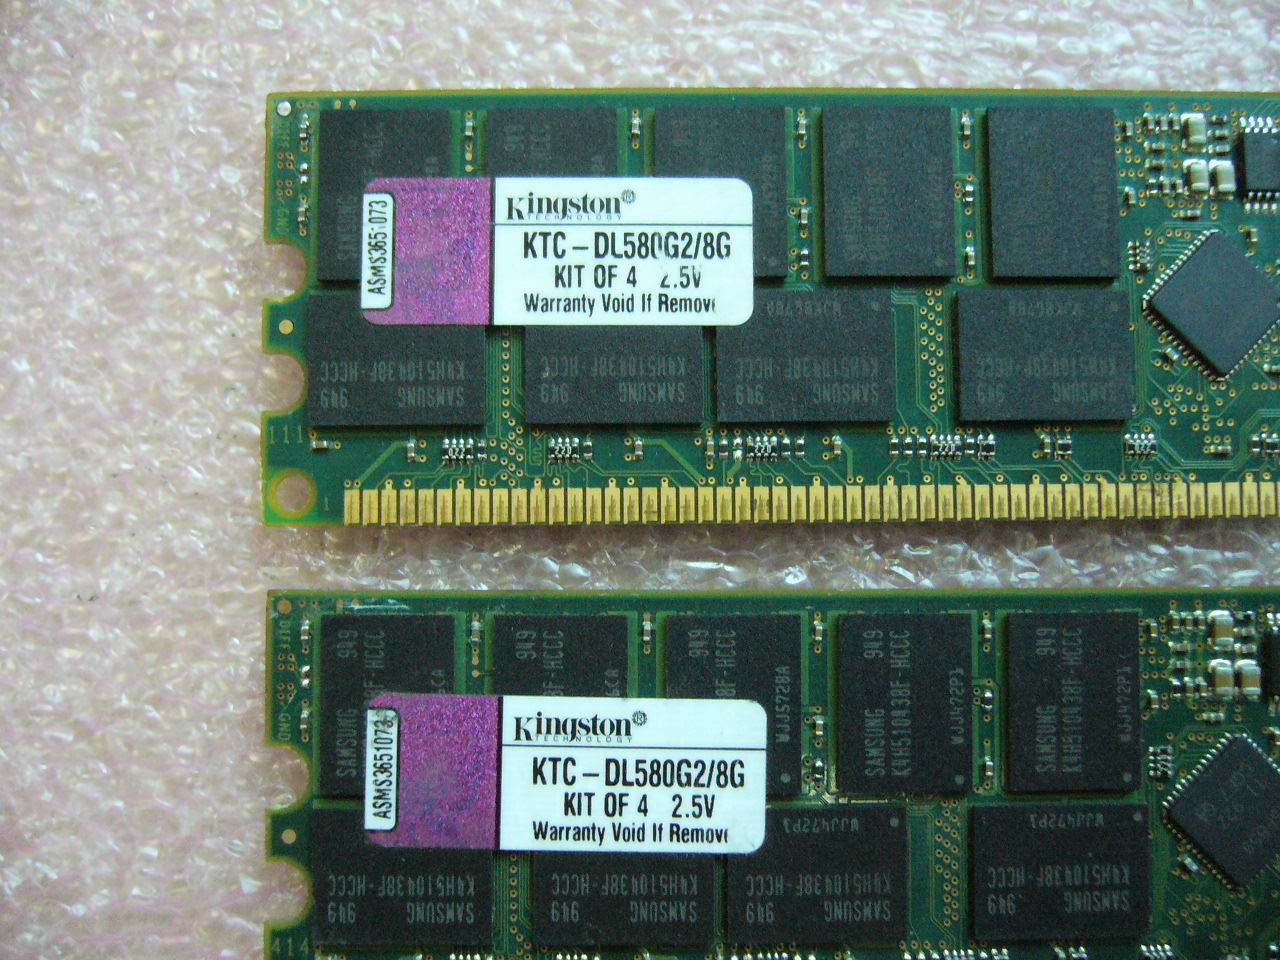 QTY 1x 2GB Module Kingston KTC-DL580G2/8G PC-1600R ECC Registered Server memory - Click Image to Close